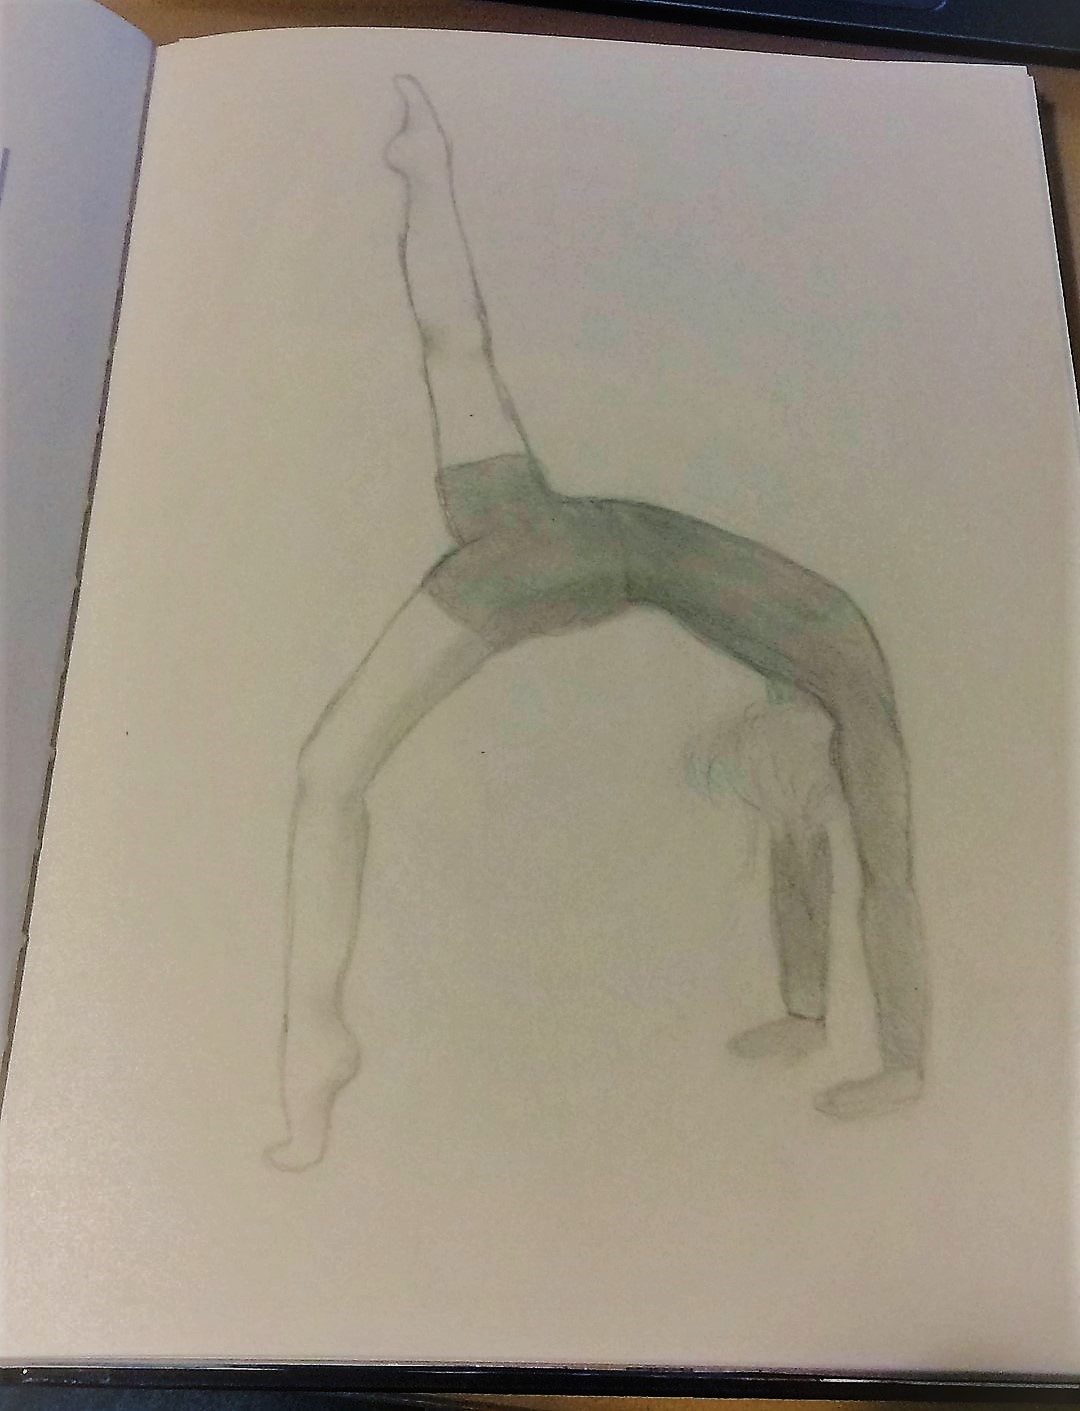 Yoga Drawing